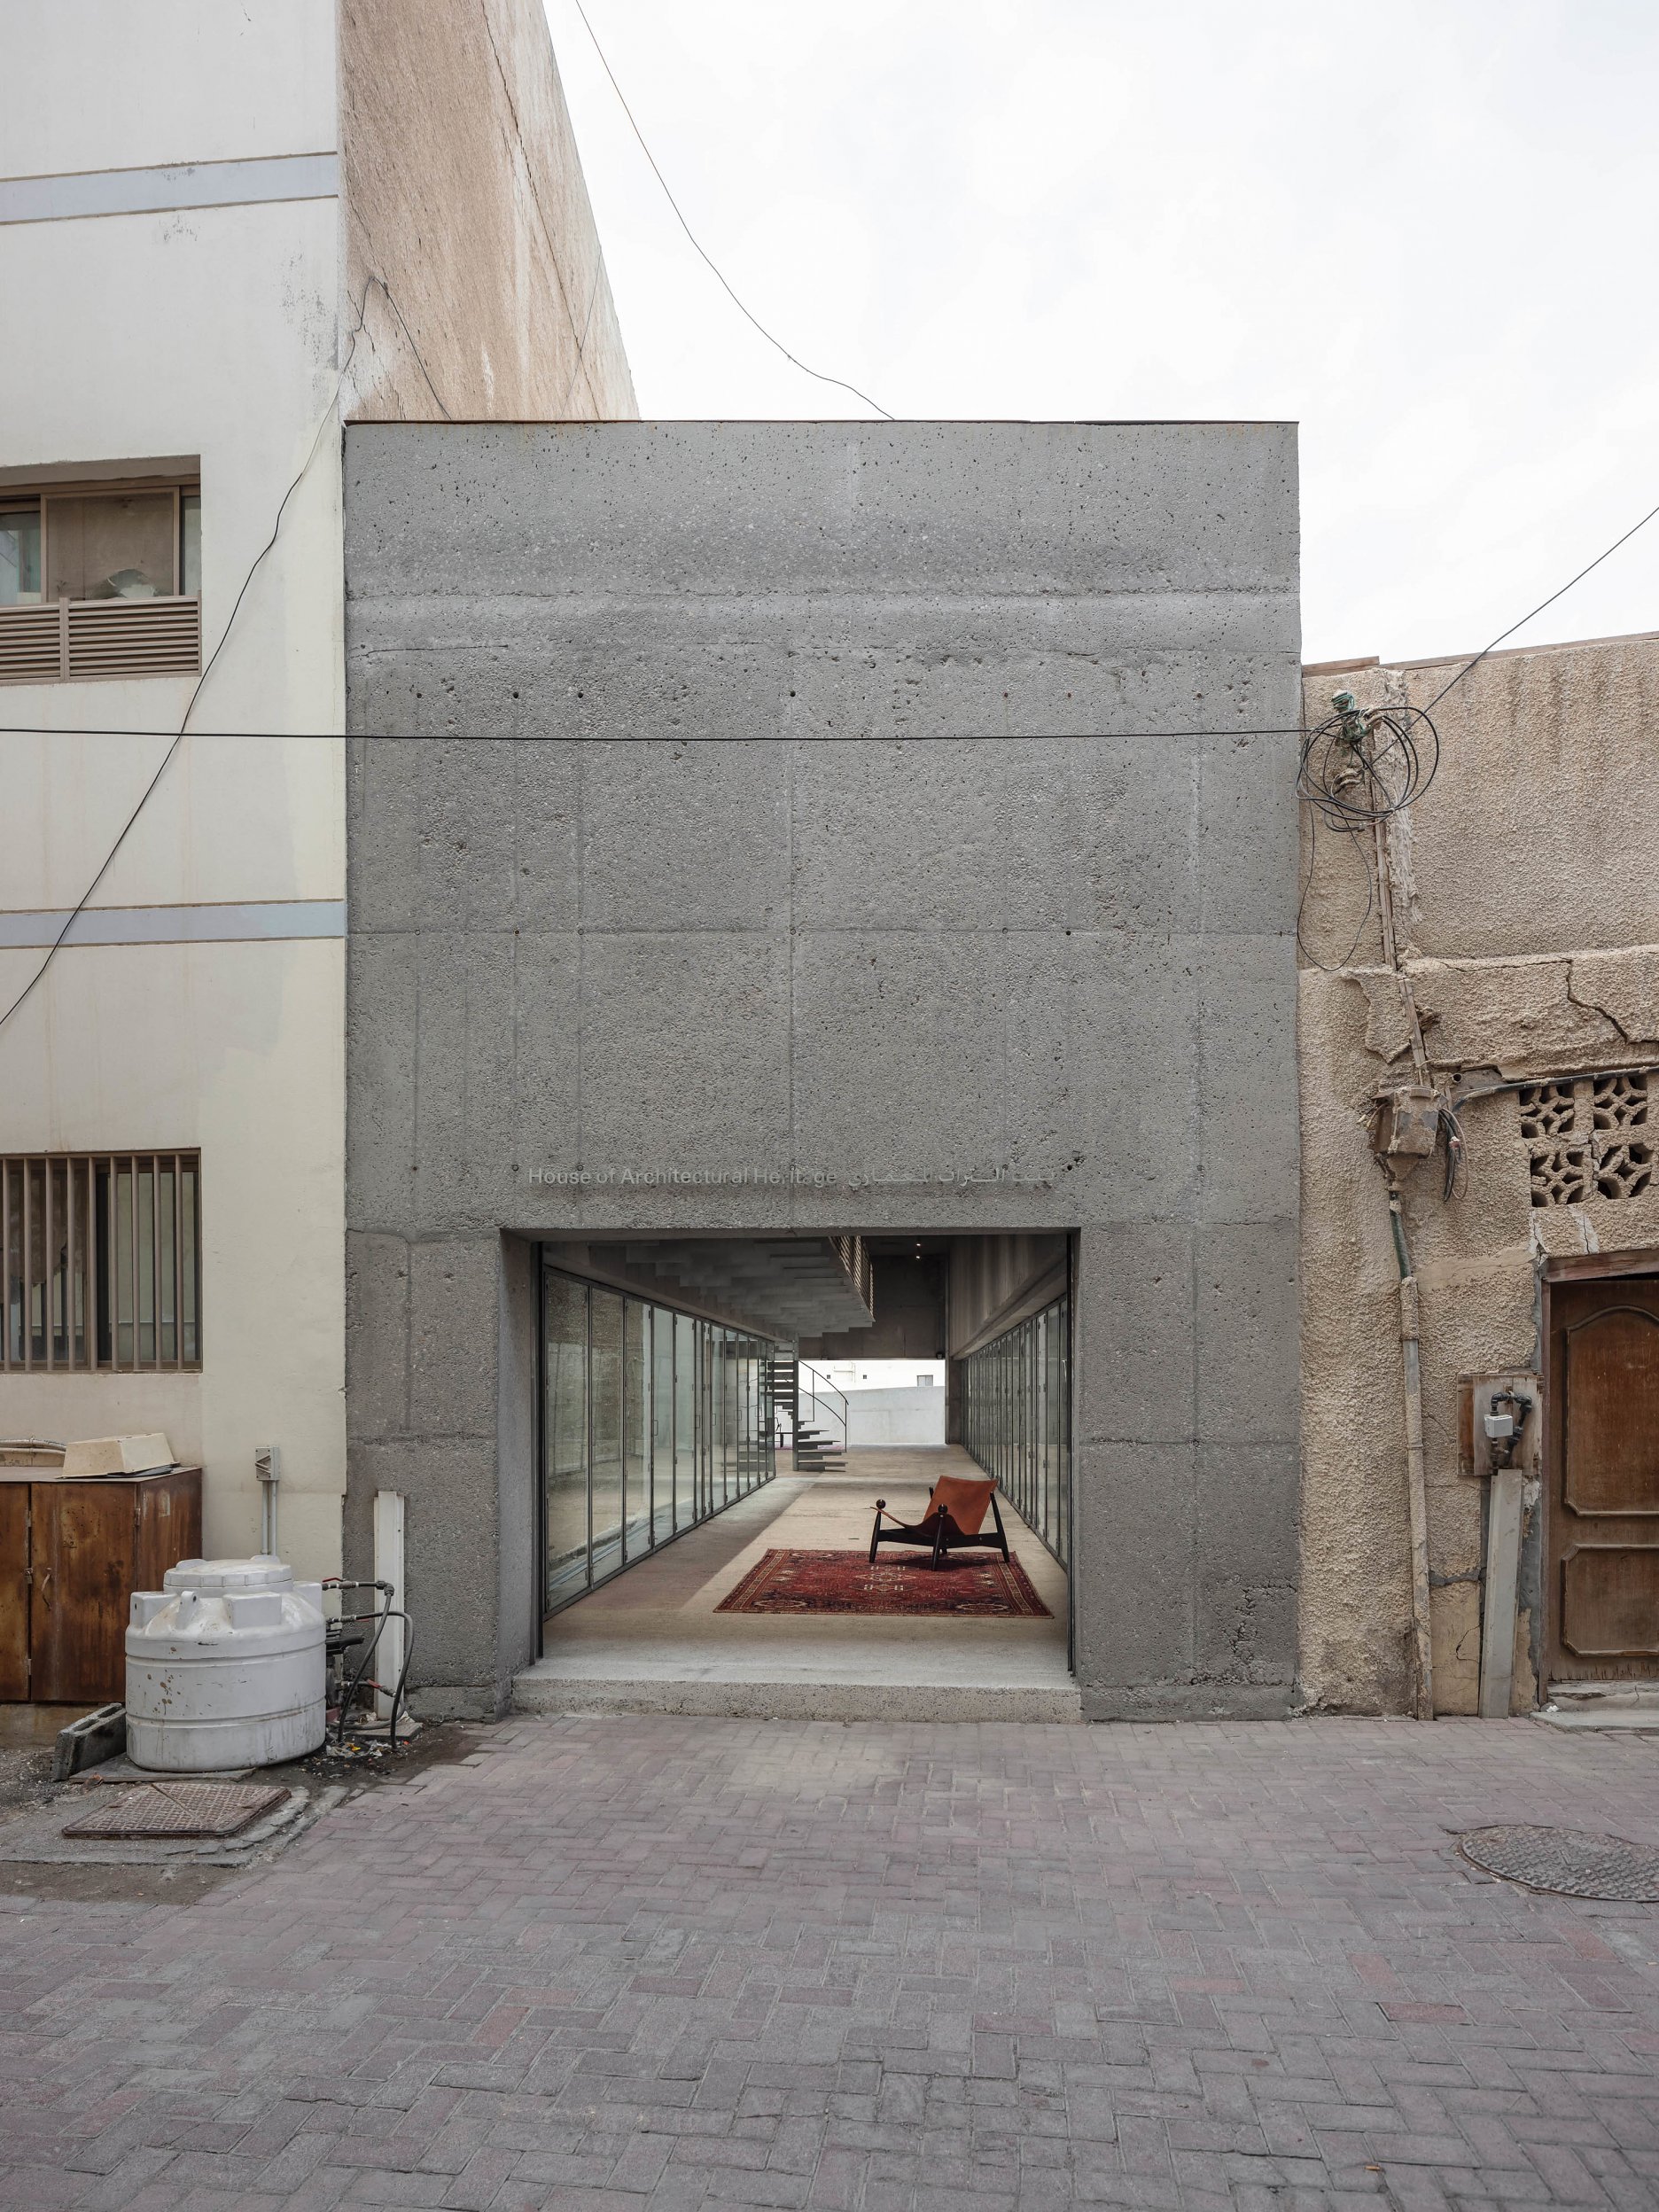 House for Architectural Heritage - Bahrajn